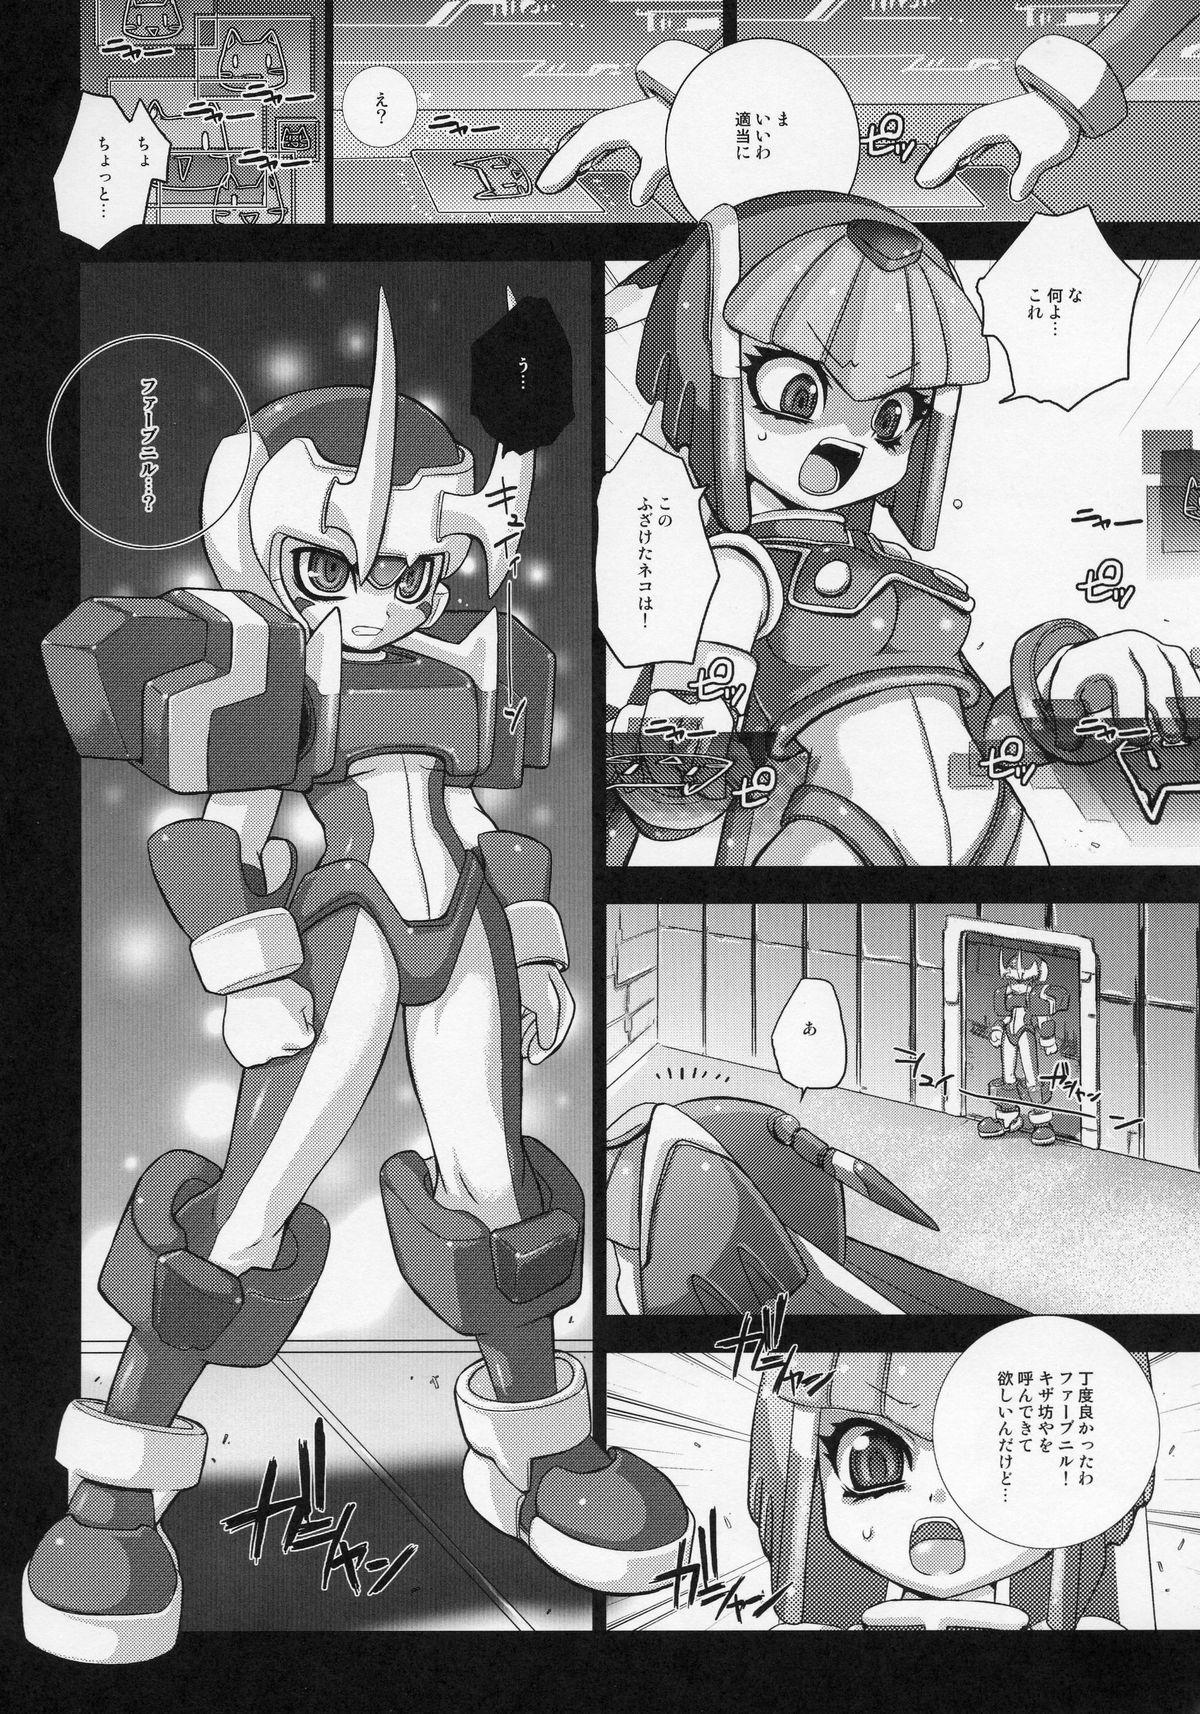 Bulge ROCKERO ROCKMAN ERO - Megaman zero Boy - Page 5